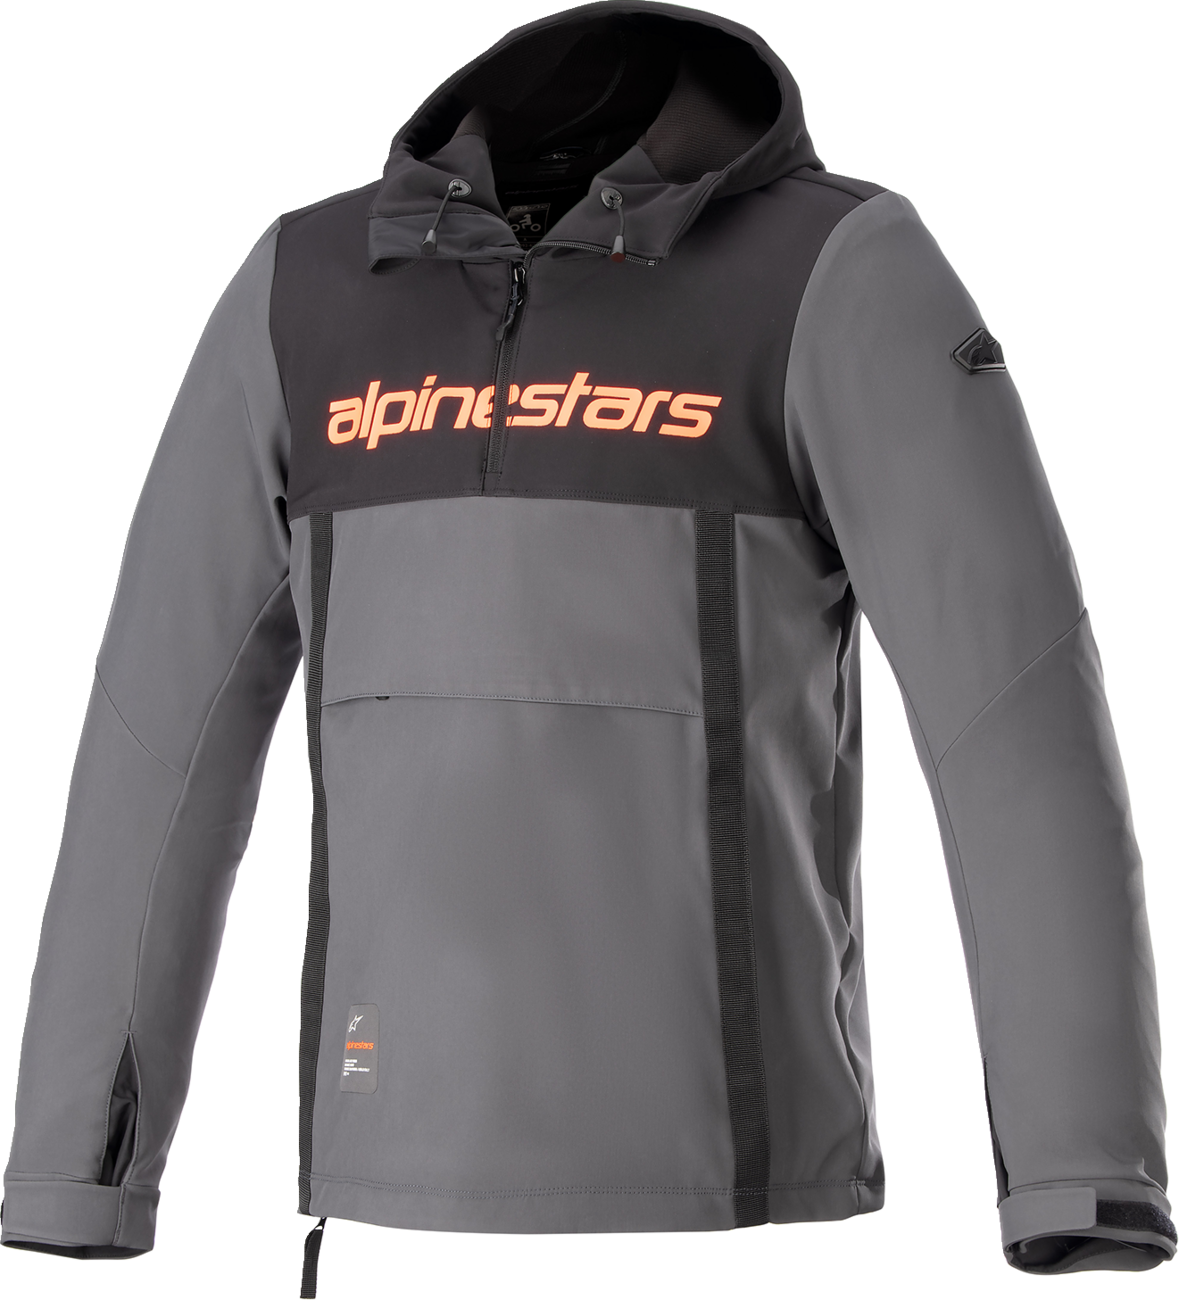 ALPINESTARS Sherpa Jacket - Black/Gray - Large 4208123-1134-L